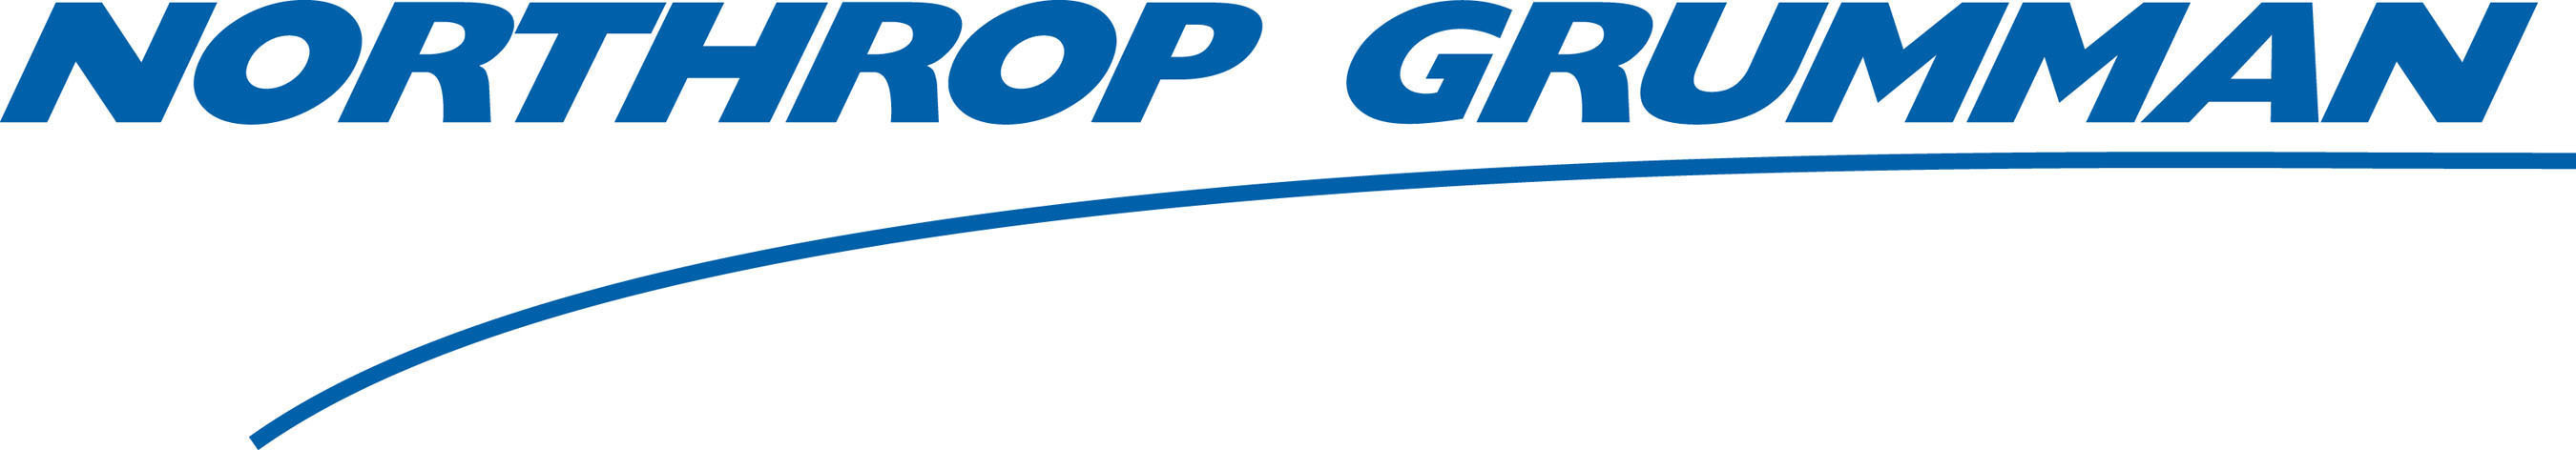 Northrop Grumman Corporation logo. (PRNewsFoto/Northrop Grumman Corporation) (PRNewsFoto/)